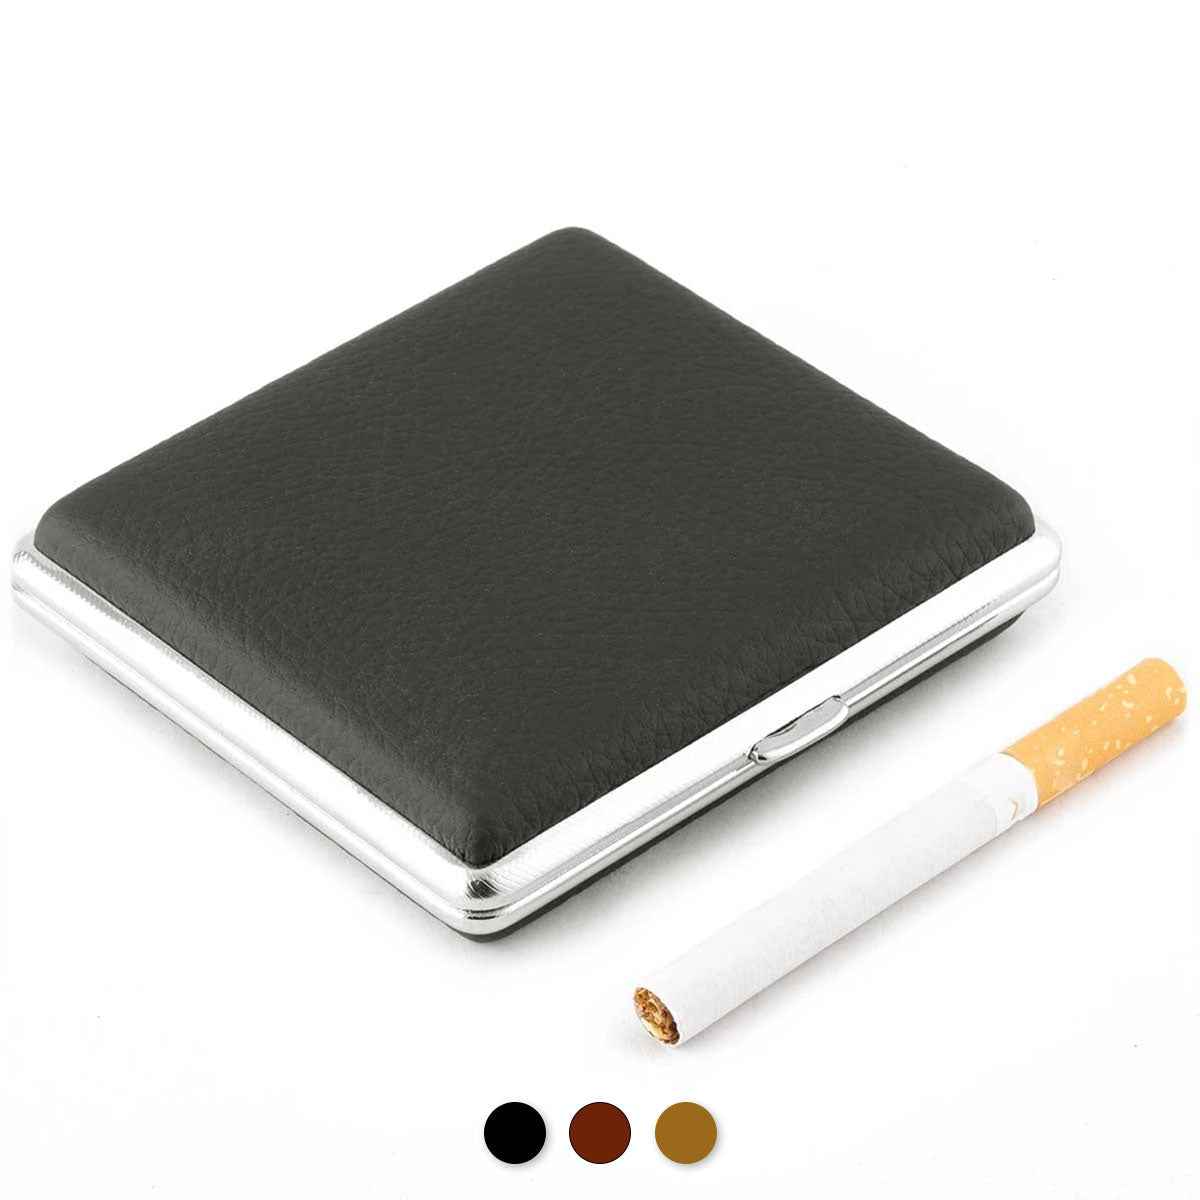  HERMES Cigar Case Ashtray Case Cigarette Case Leather Unisex  Used : Clothing, Shoes & Jewelry